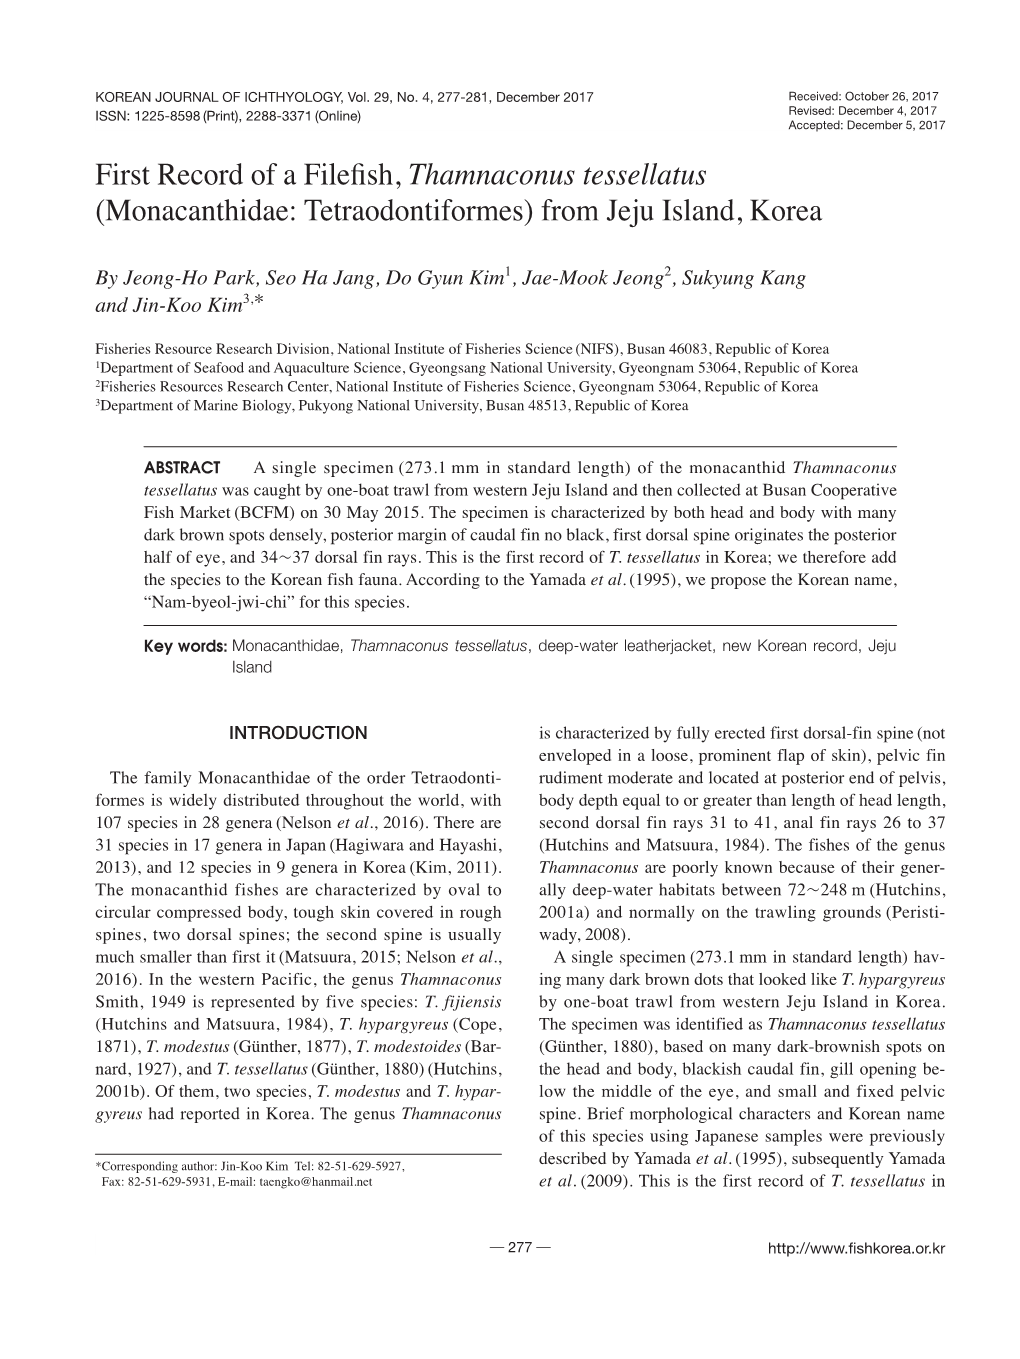 First Record of a Filefish, Thamnaconus Tessellatus (Monacanthidae: Tetraodontiformes) from Jeju Island, Korea